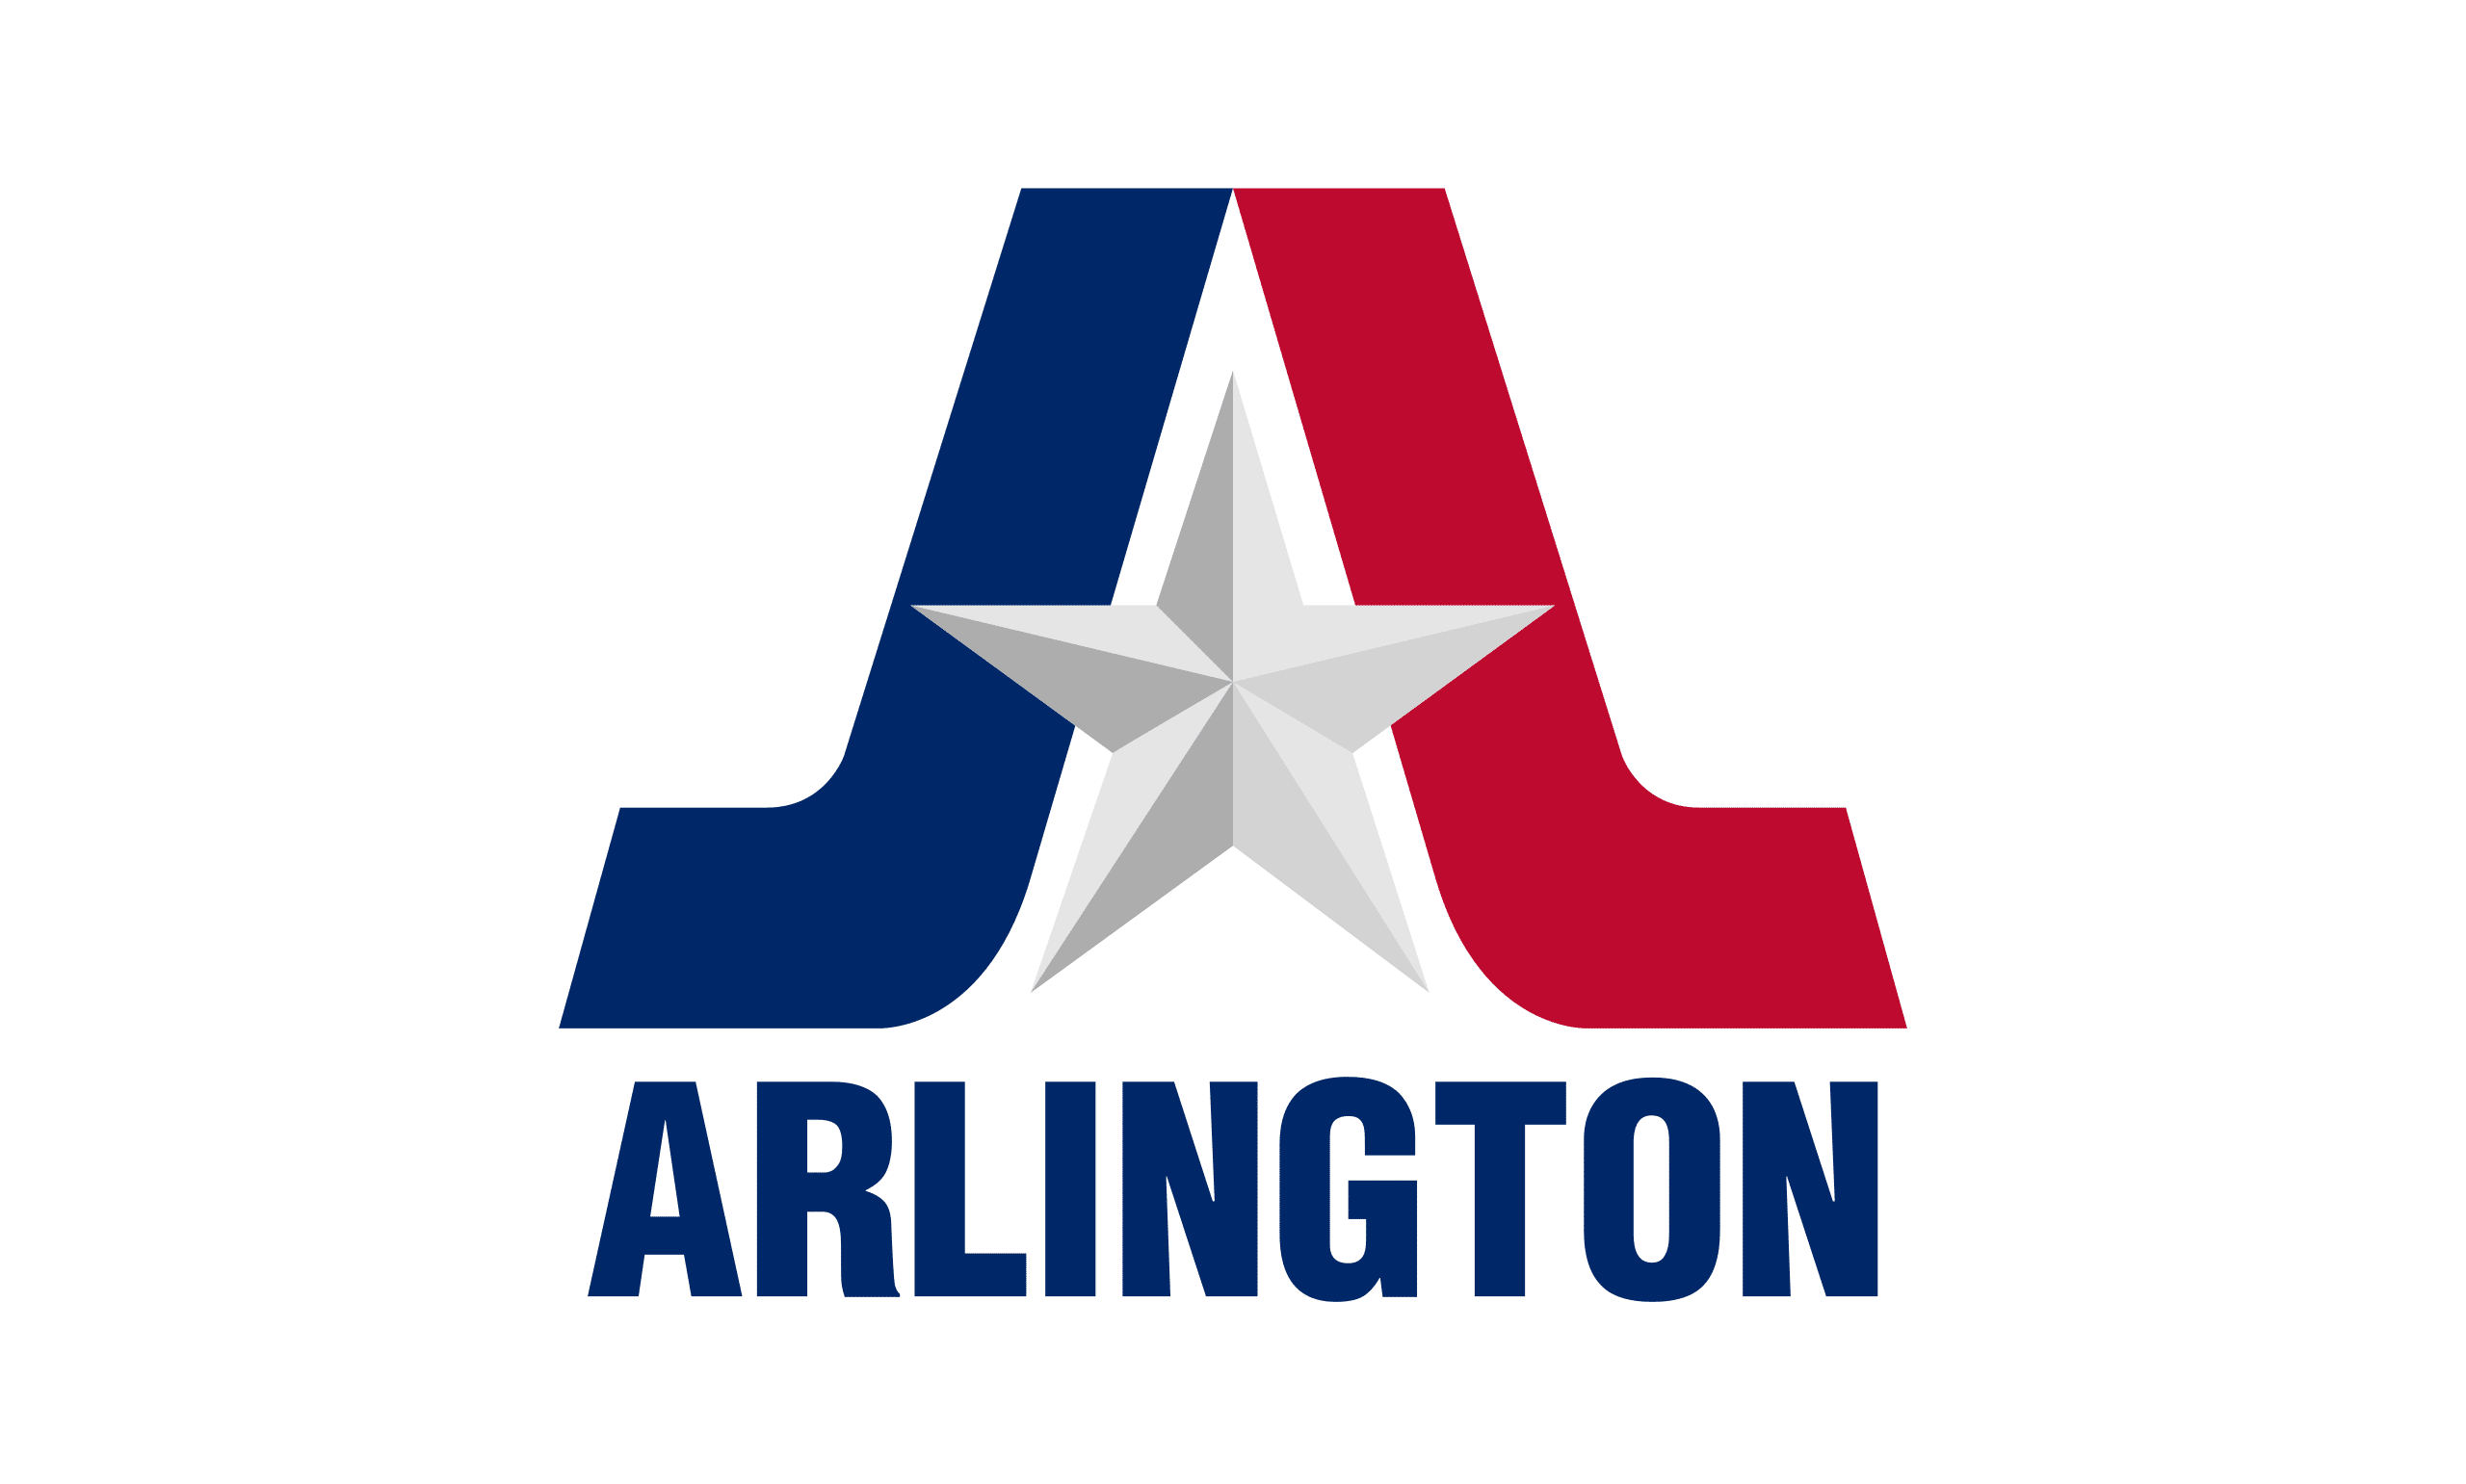 Arlington TX city logo